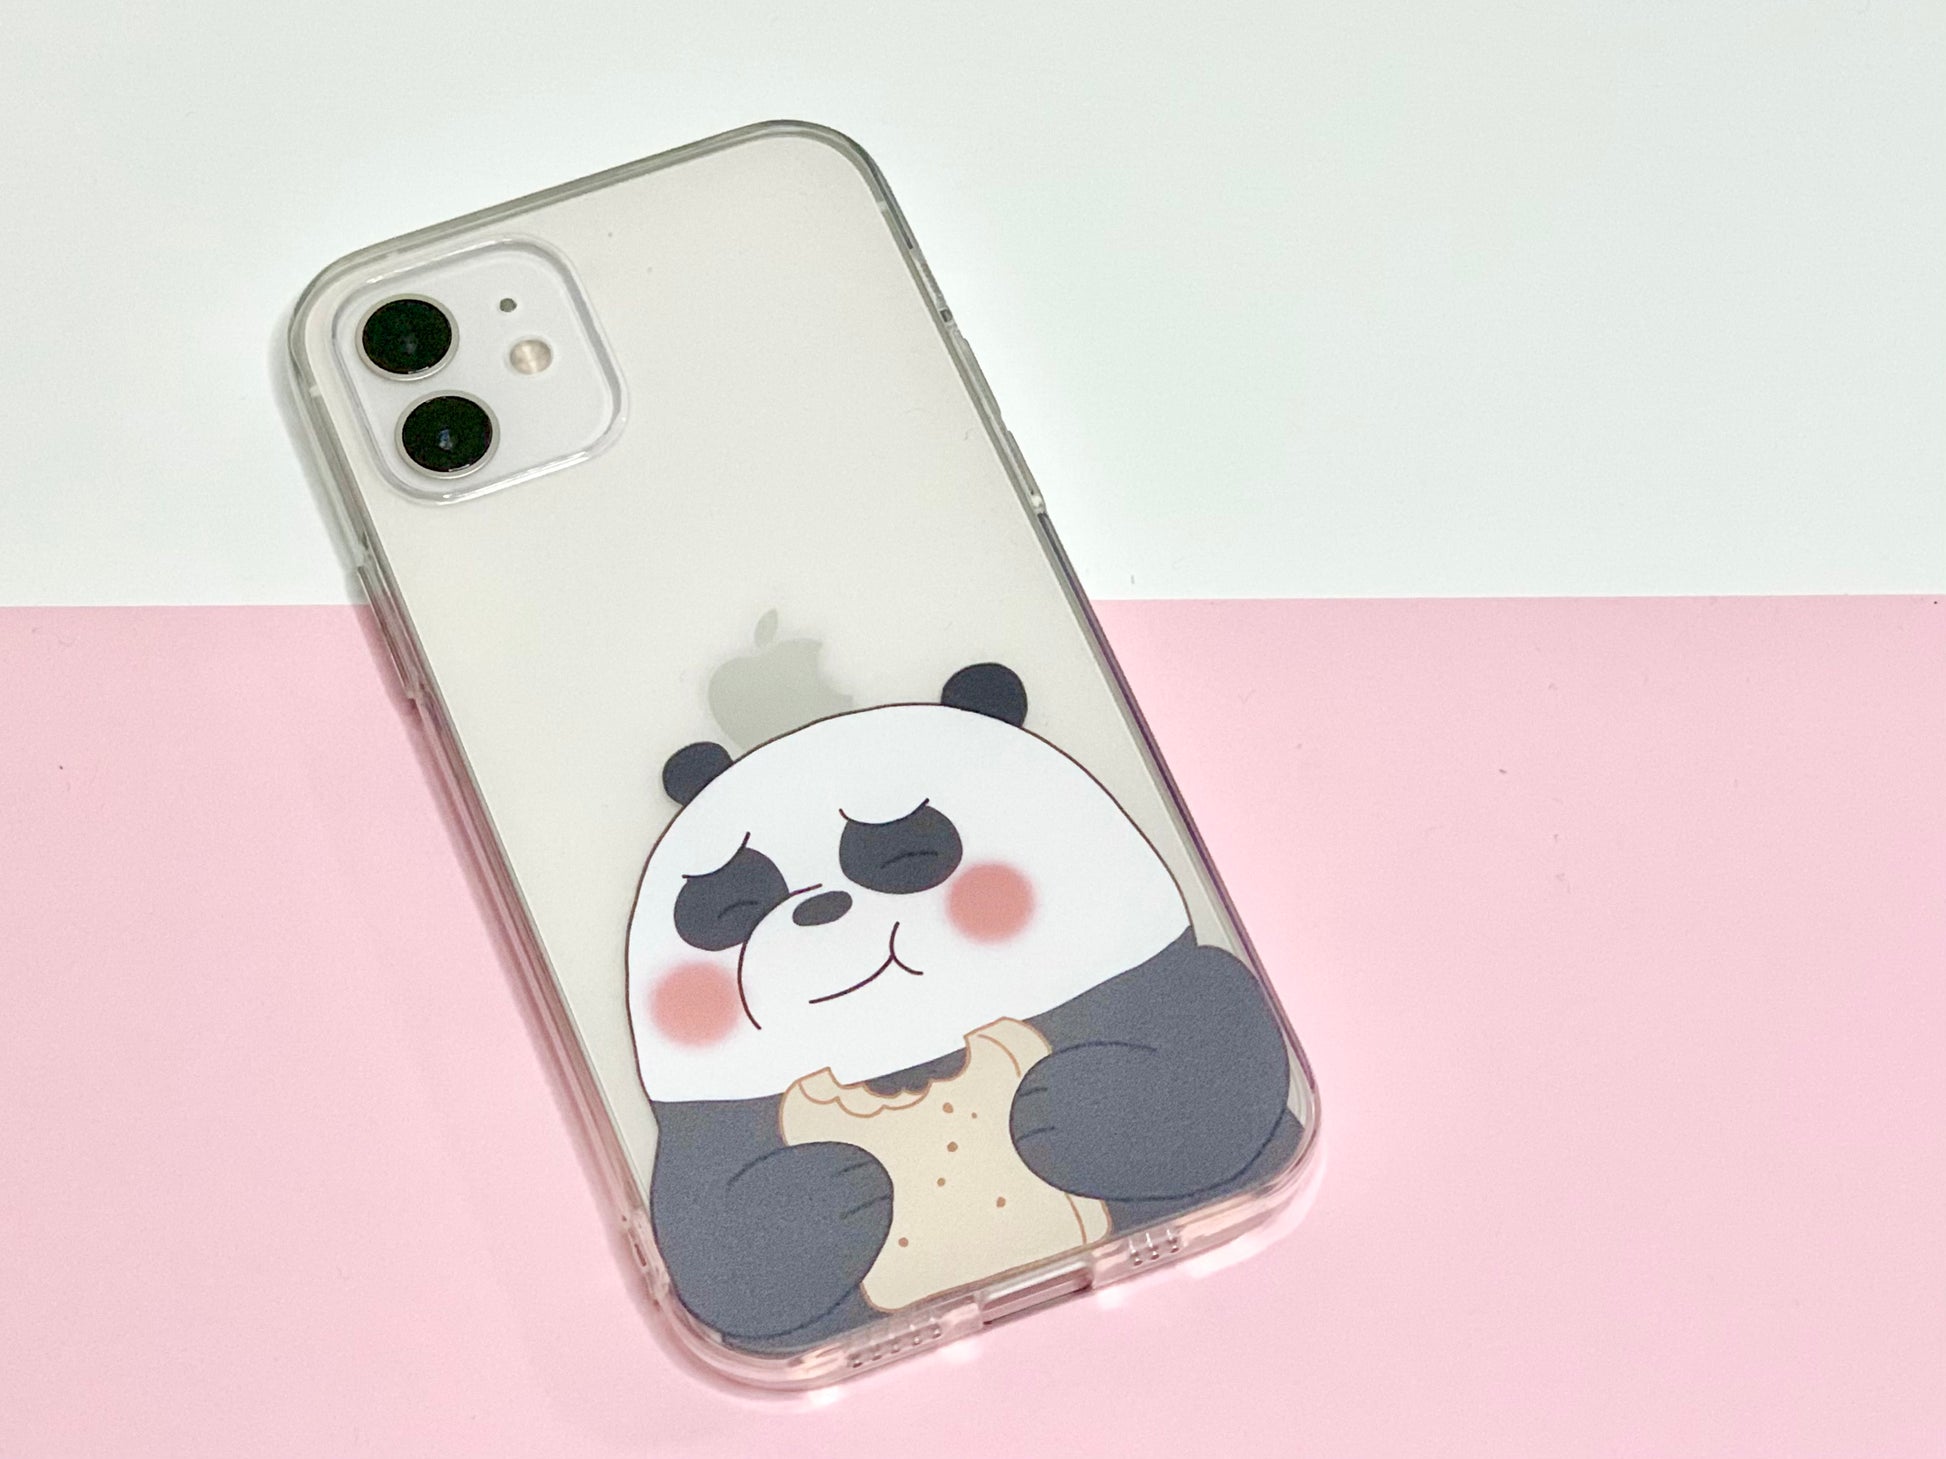 Coral & Ink’s Kawaii panda iPhone case